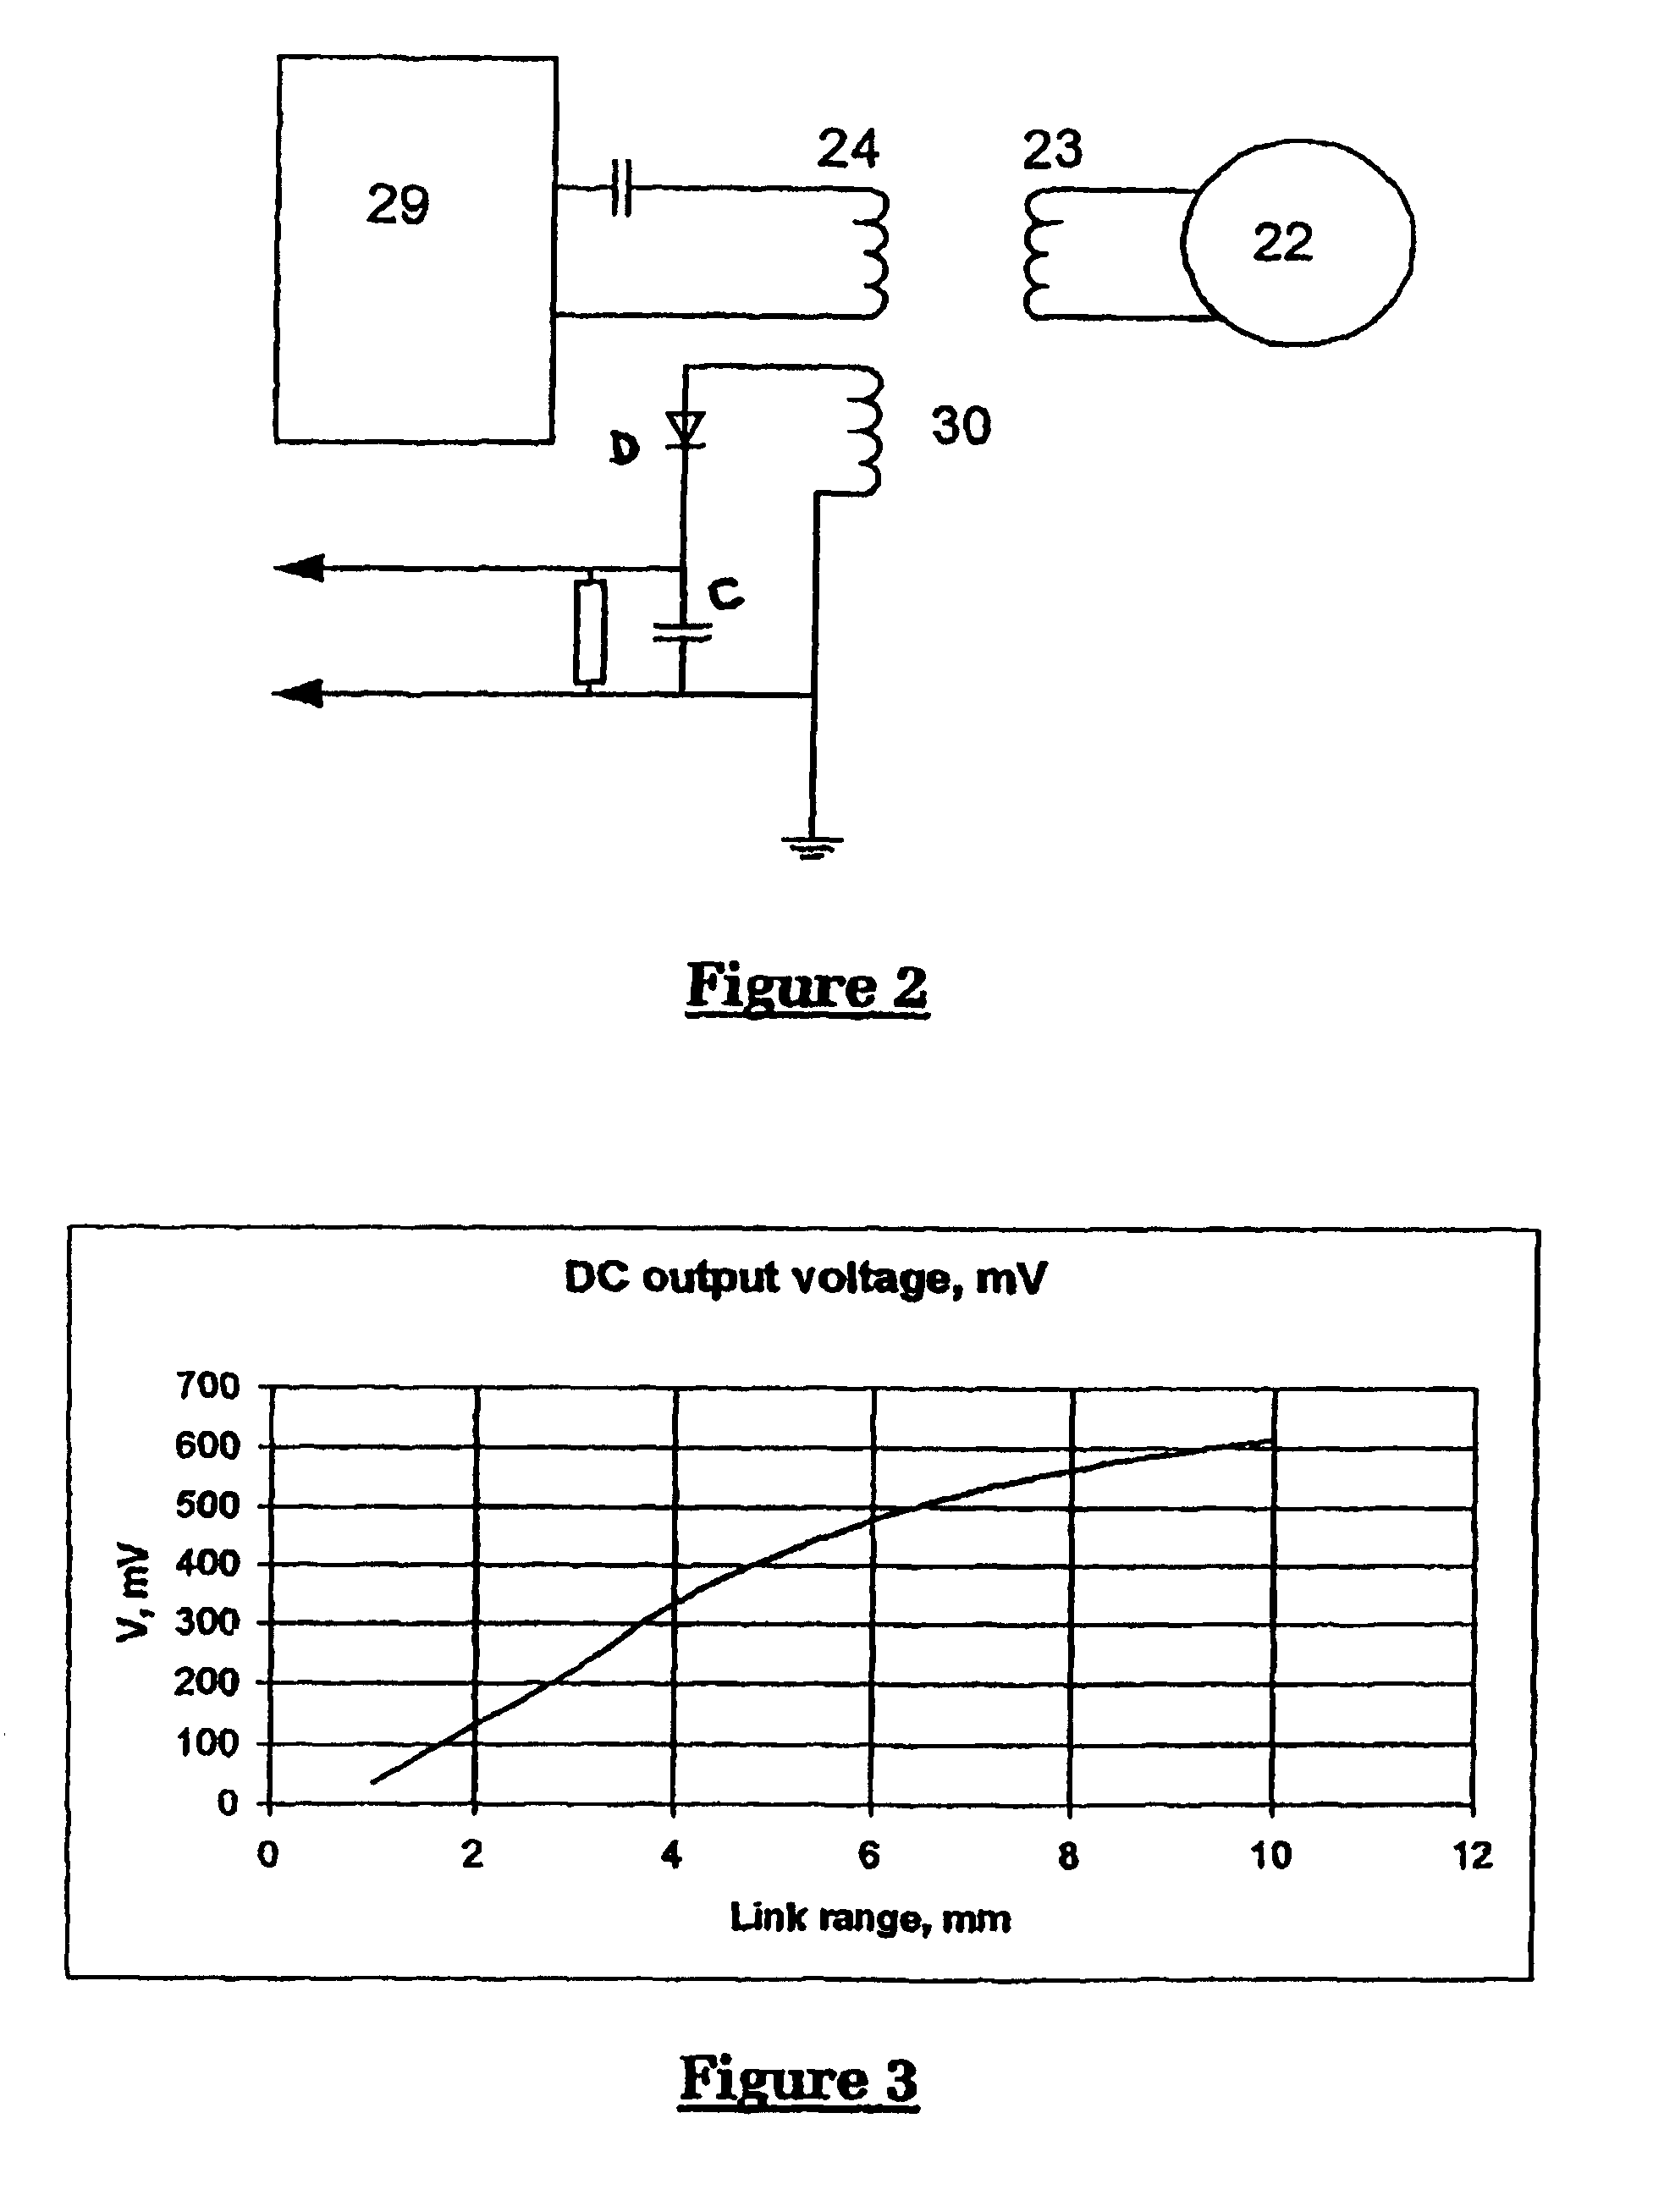 Measurement of transmitter/receiver separation